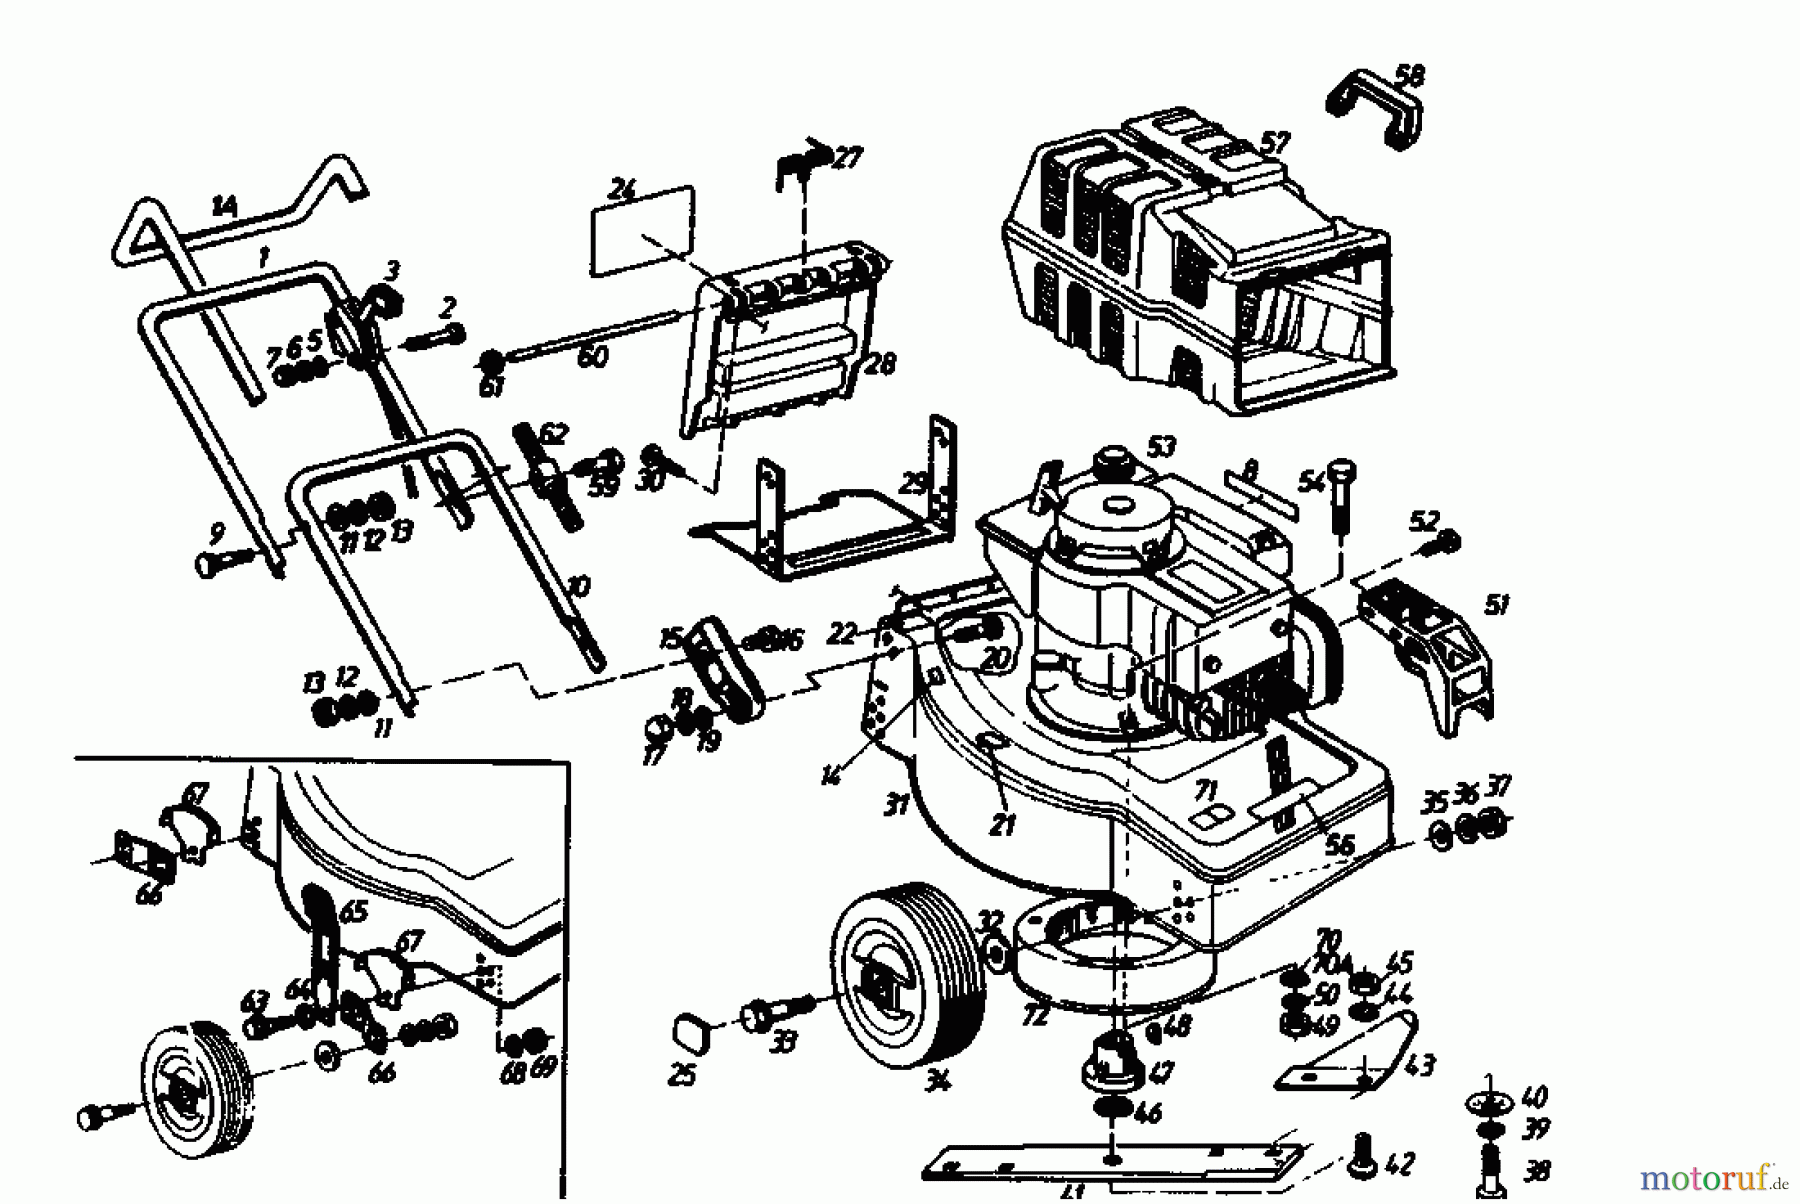  Golf Petrol mower HB 02880.03  (1989) Basic machine